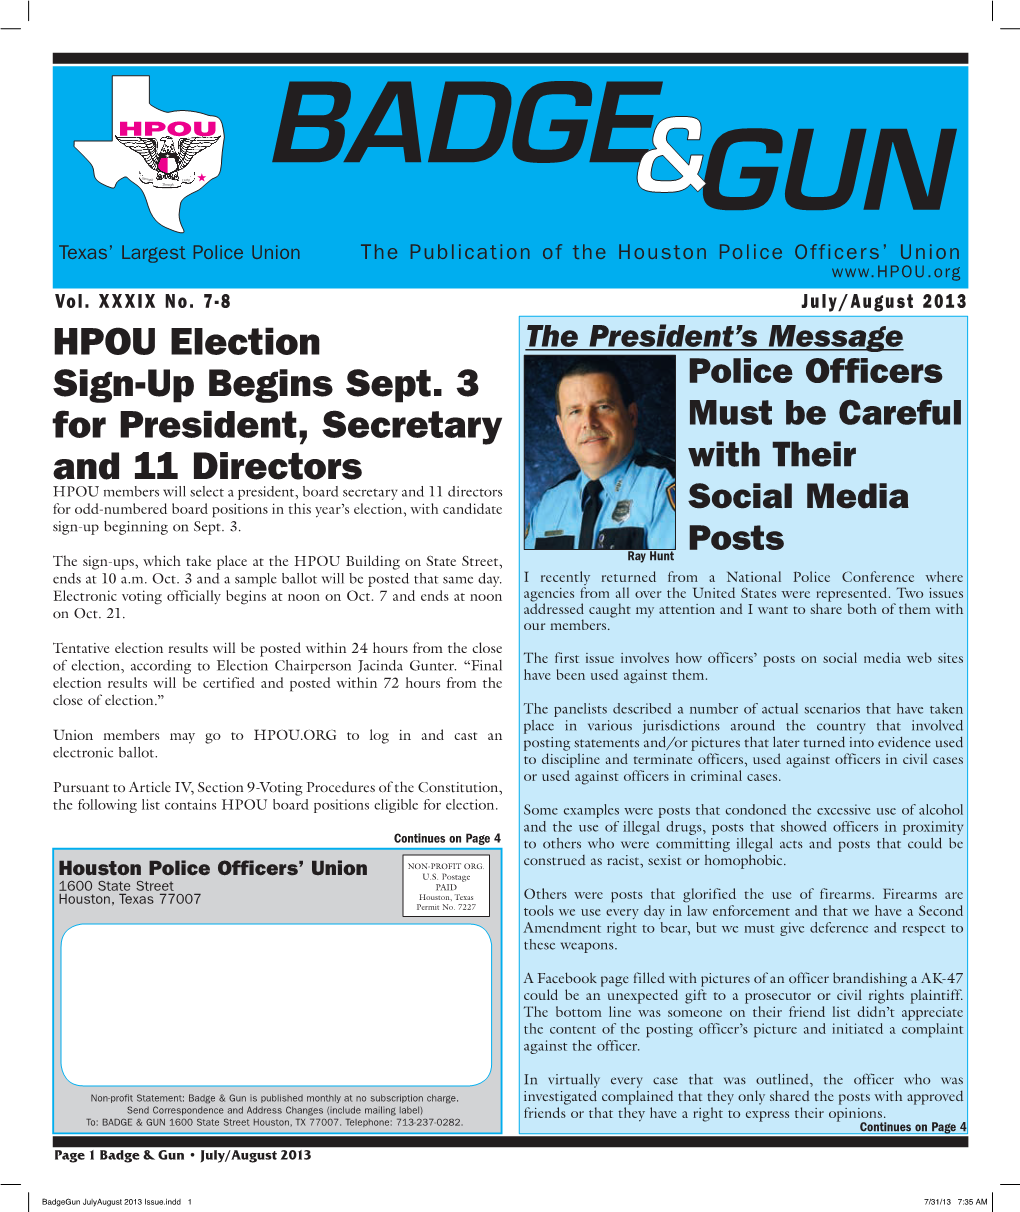 HPOU Election Sign-Up Begins Sept. 3 for President, Secretary and 11